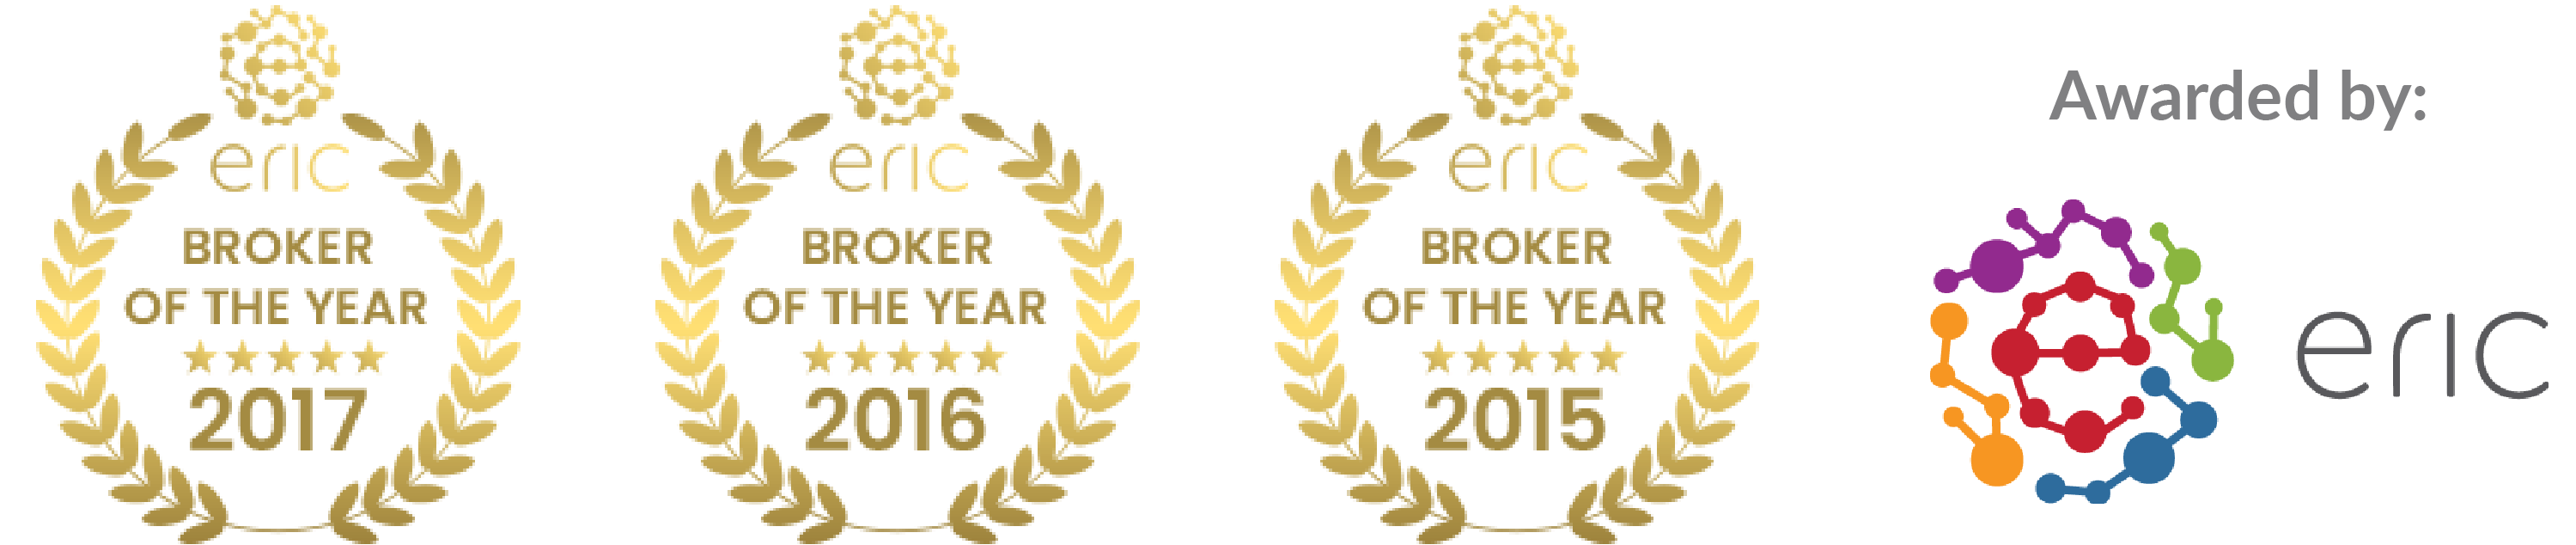 Eric Award